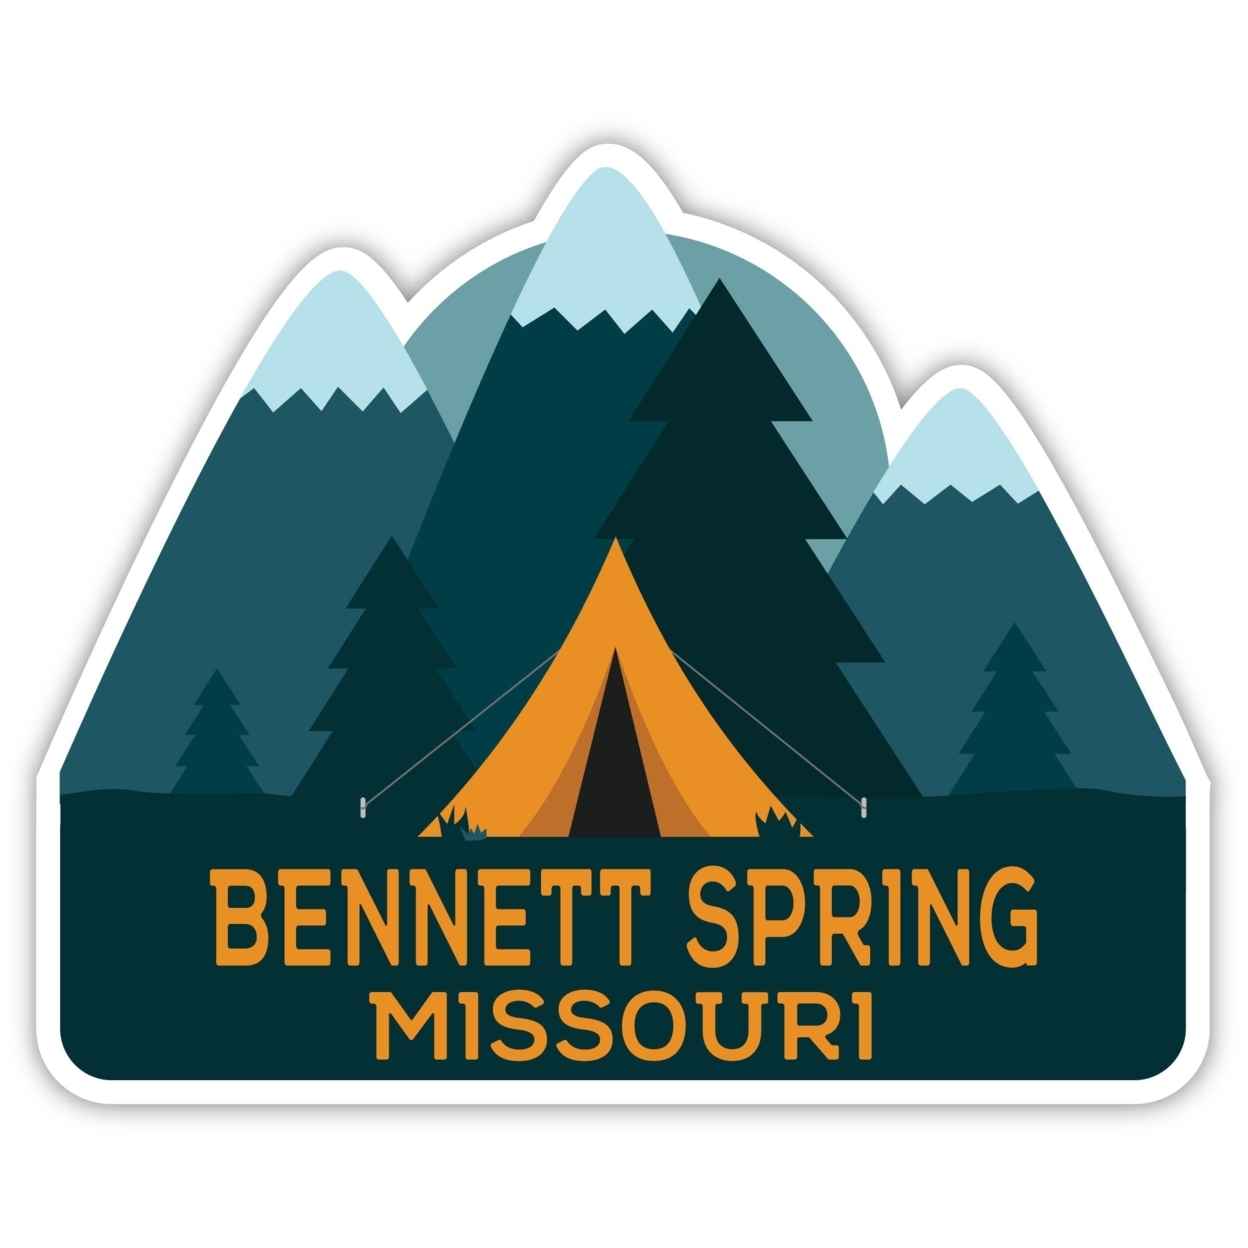 Bennett Spring Missouri Souvenir Decorative Stickers (Choose Theme And Size) - Single Unit, 8-Inch, Tent